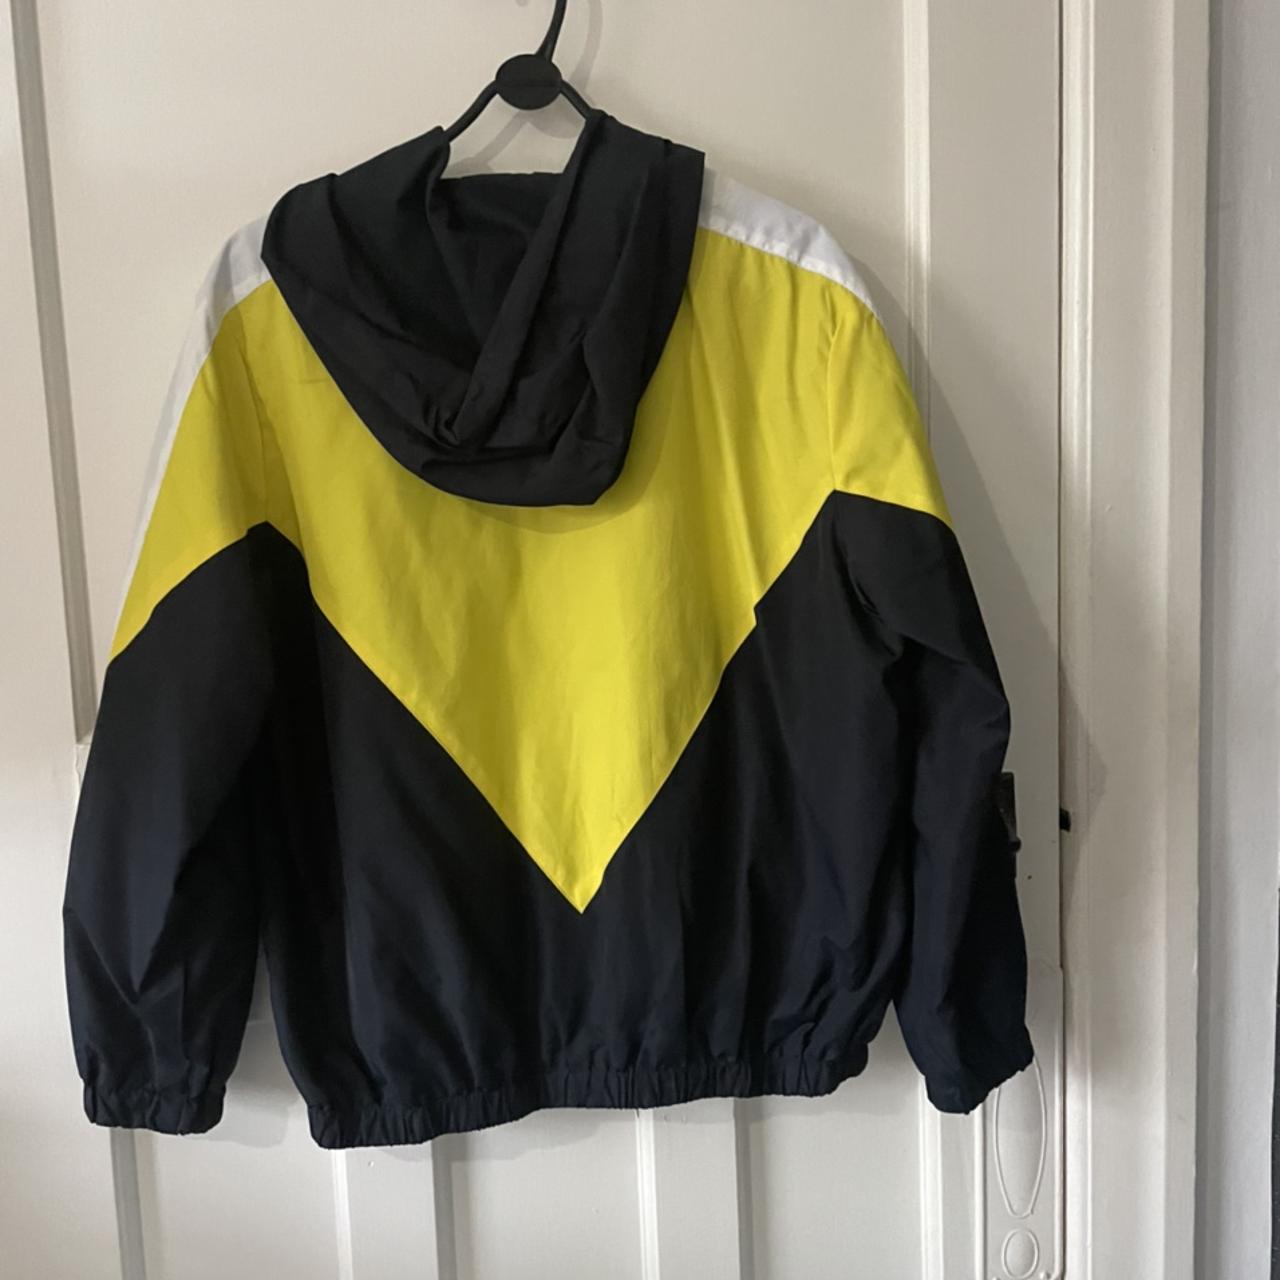 Classic top shop coloured wind breaker jacket. Loved... - Depop